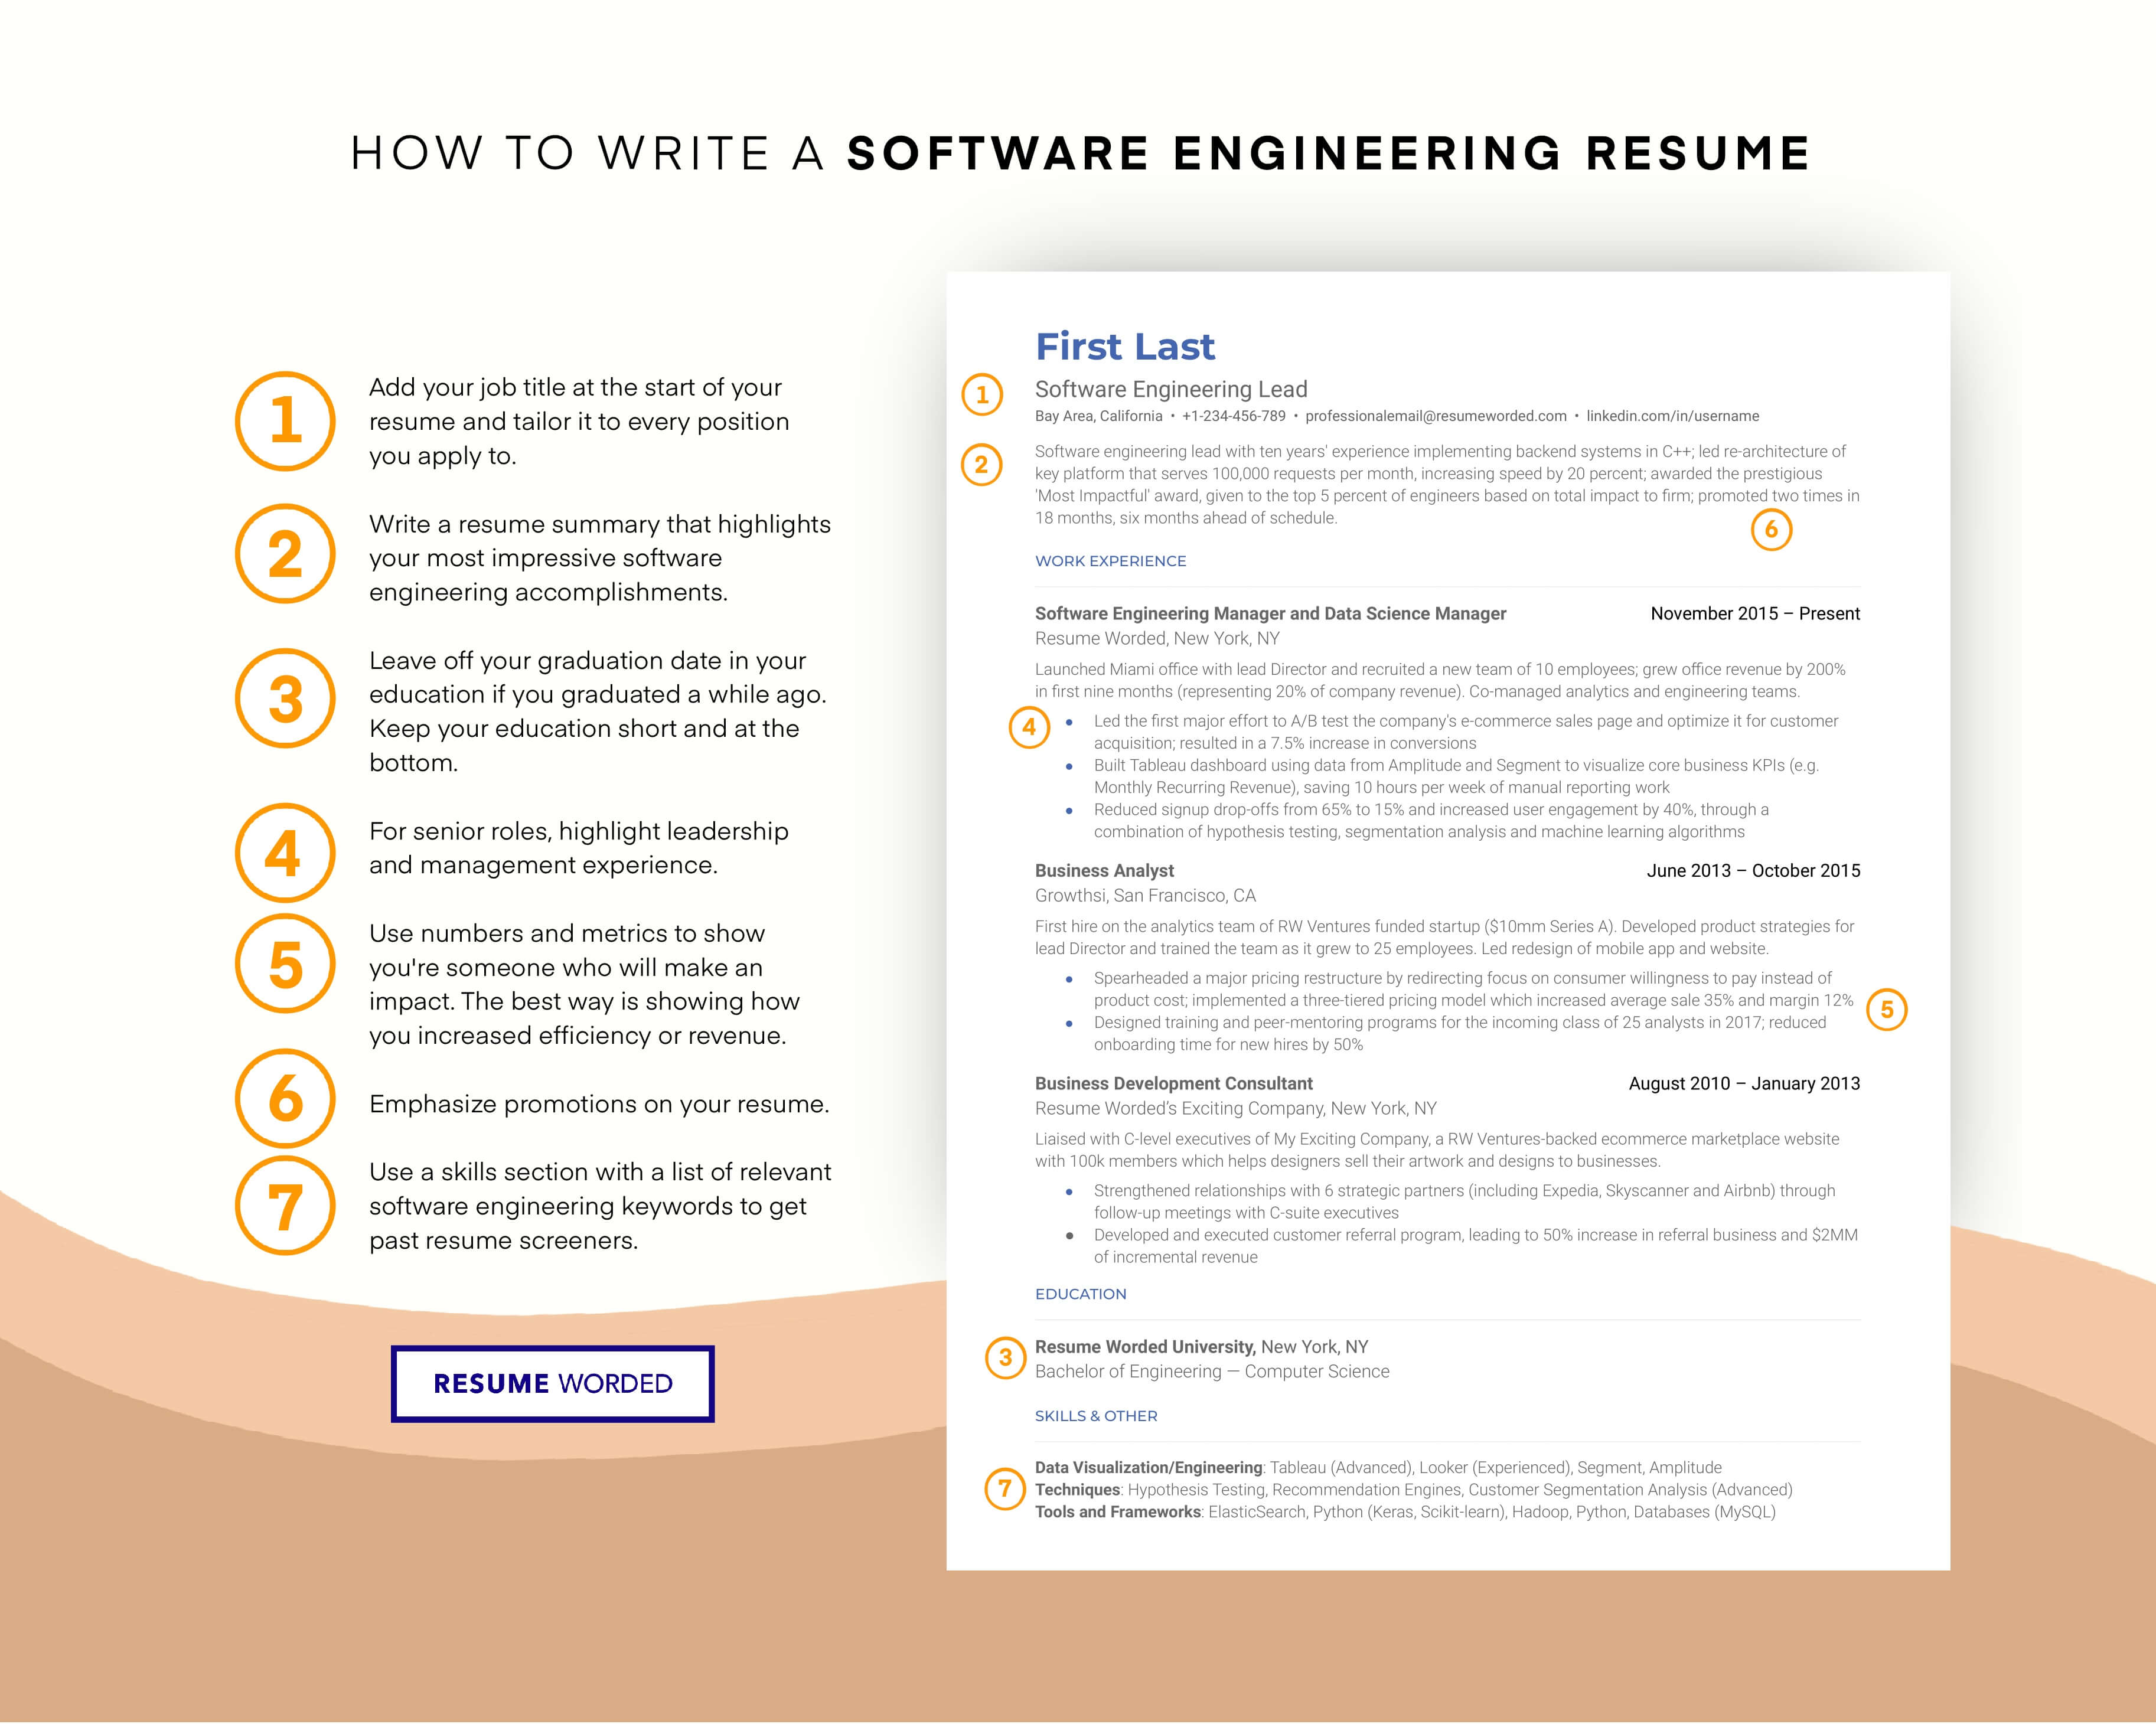 Detail your software knowledge - Accounts Receivable CV